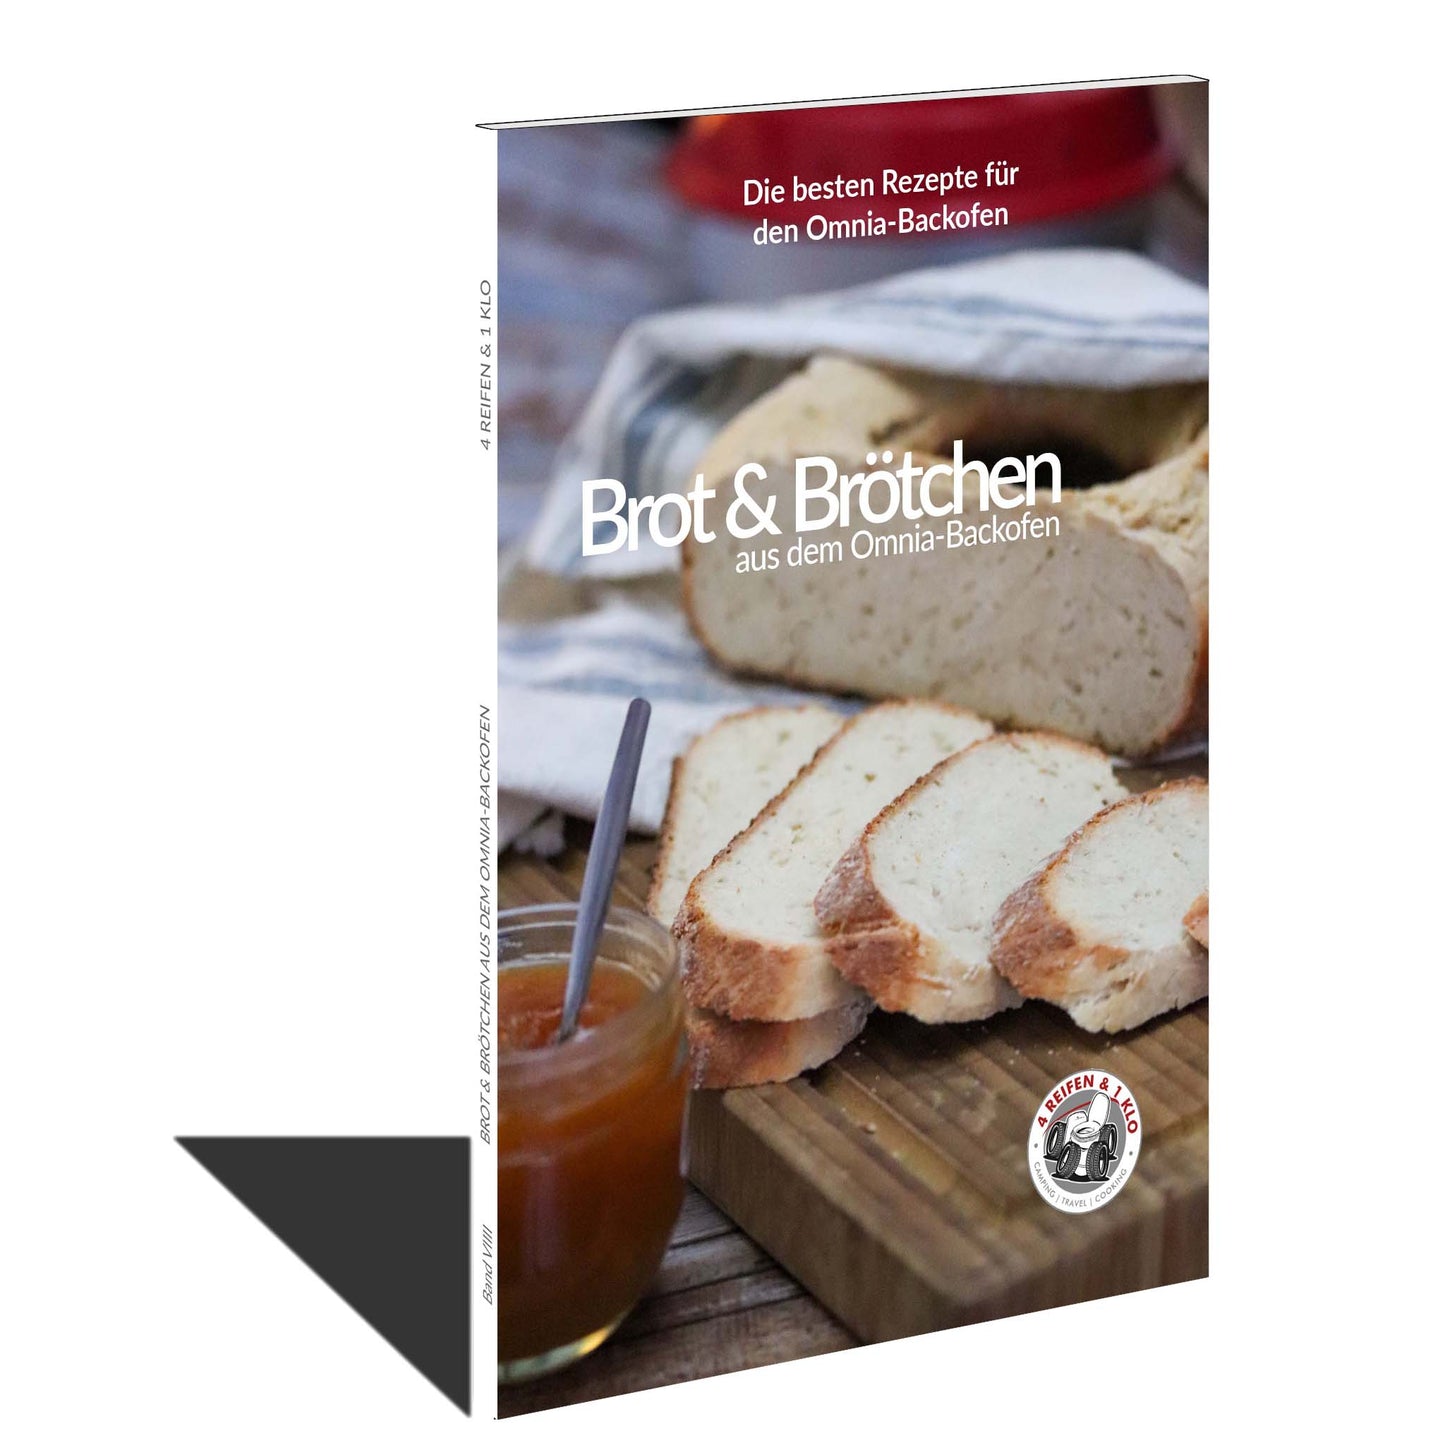 Brot & Brötchen aus dem Omnia-Backofen | Campingbackofen Rezepte